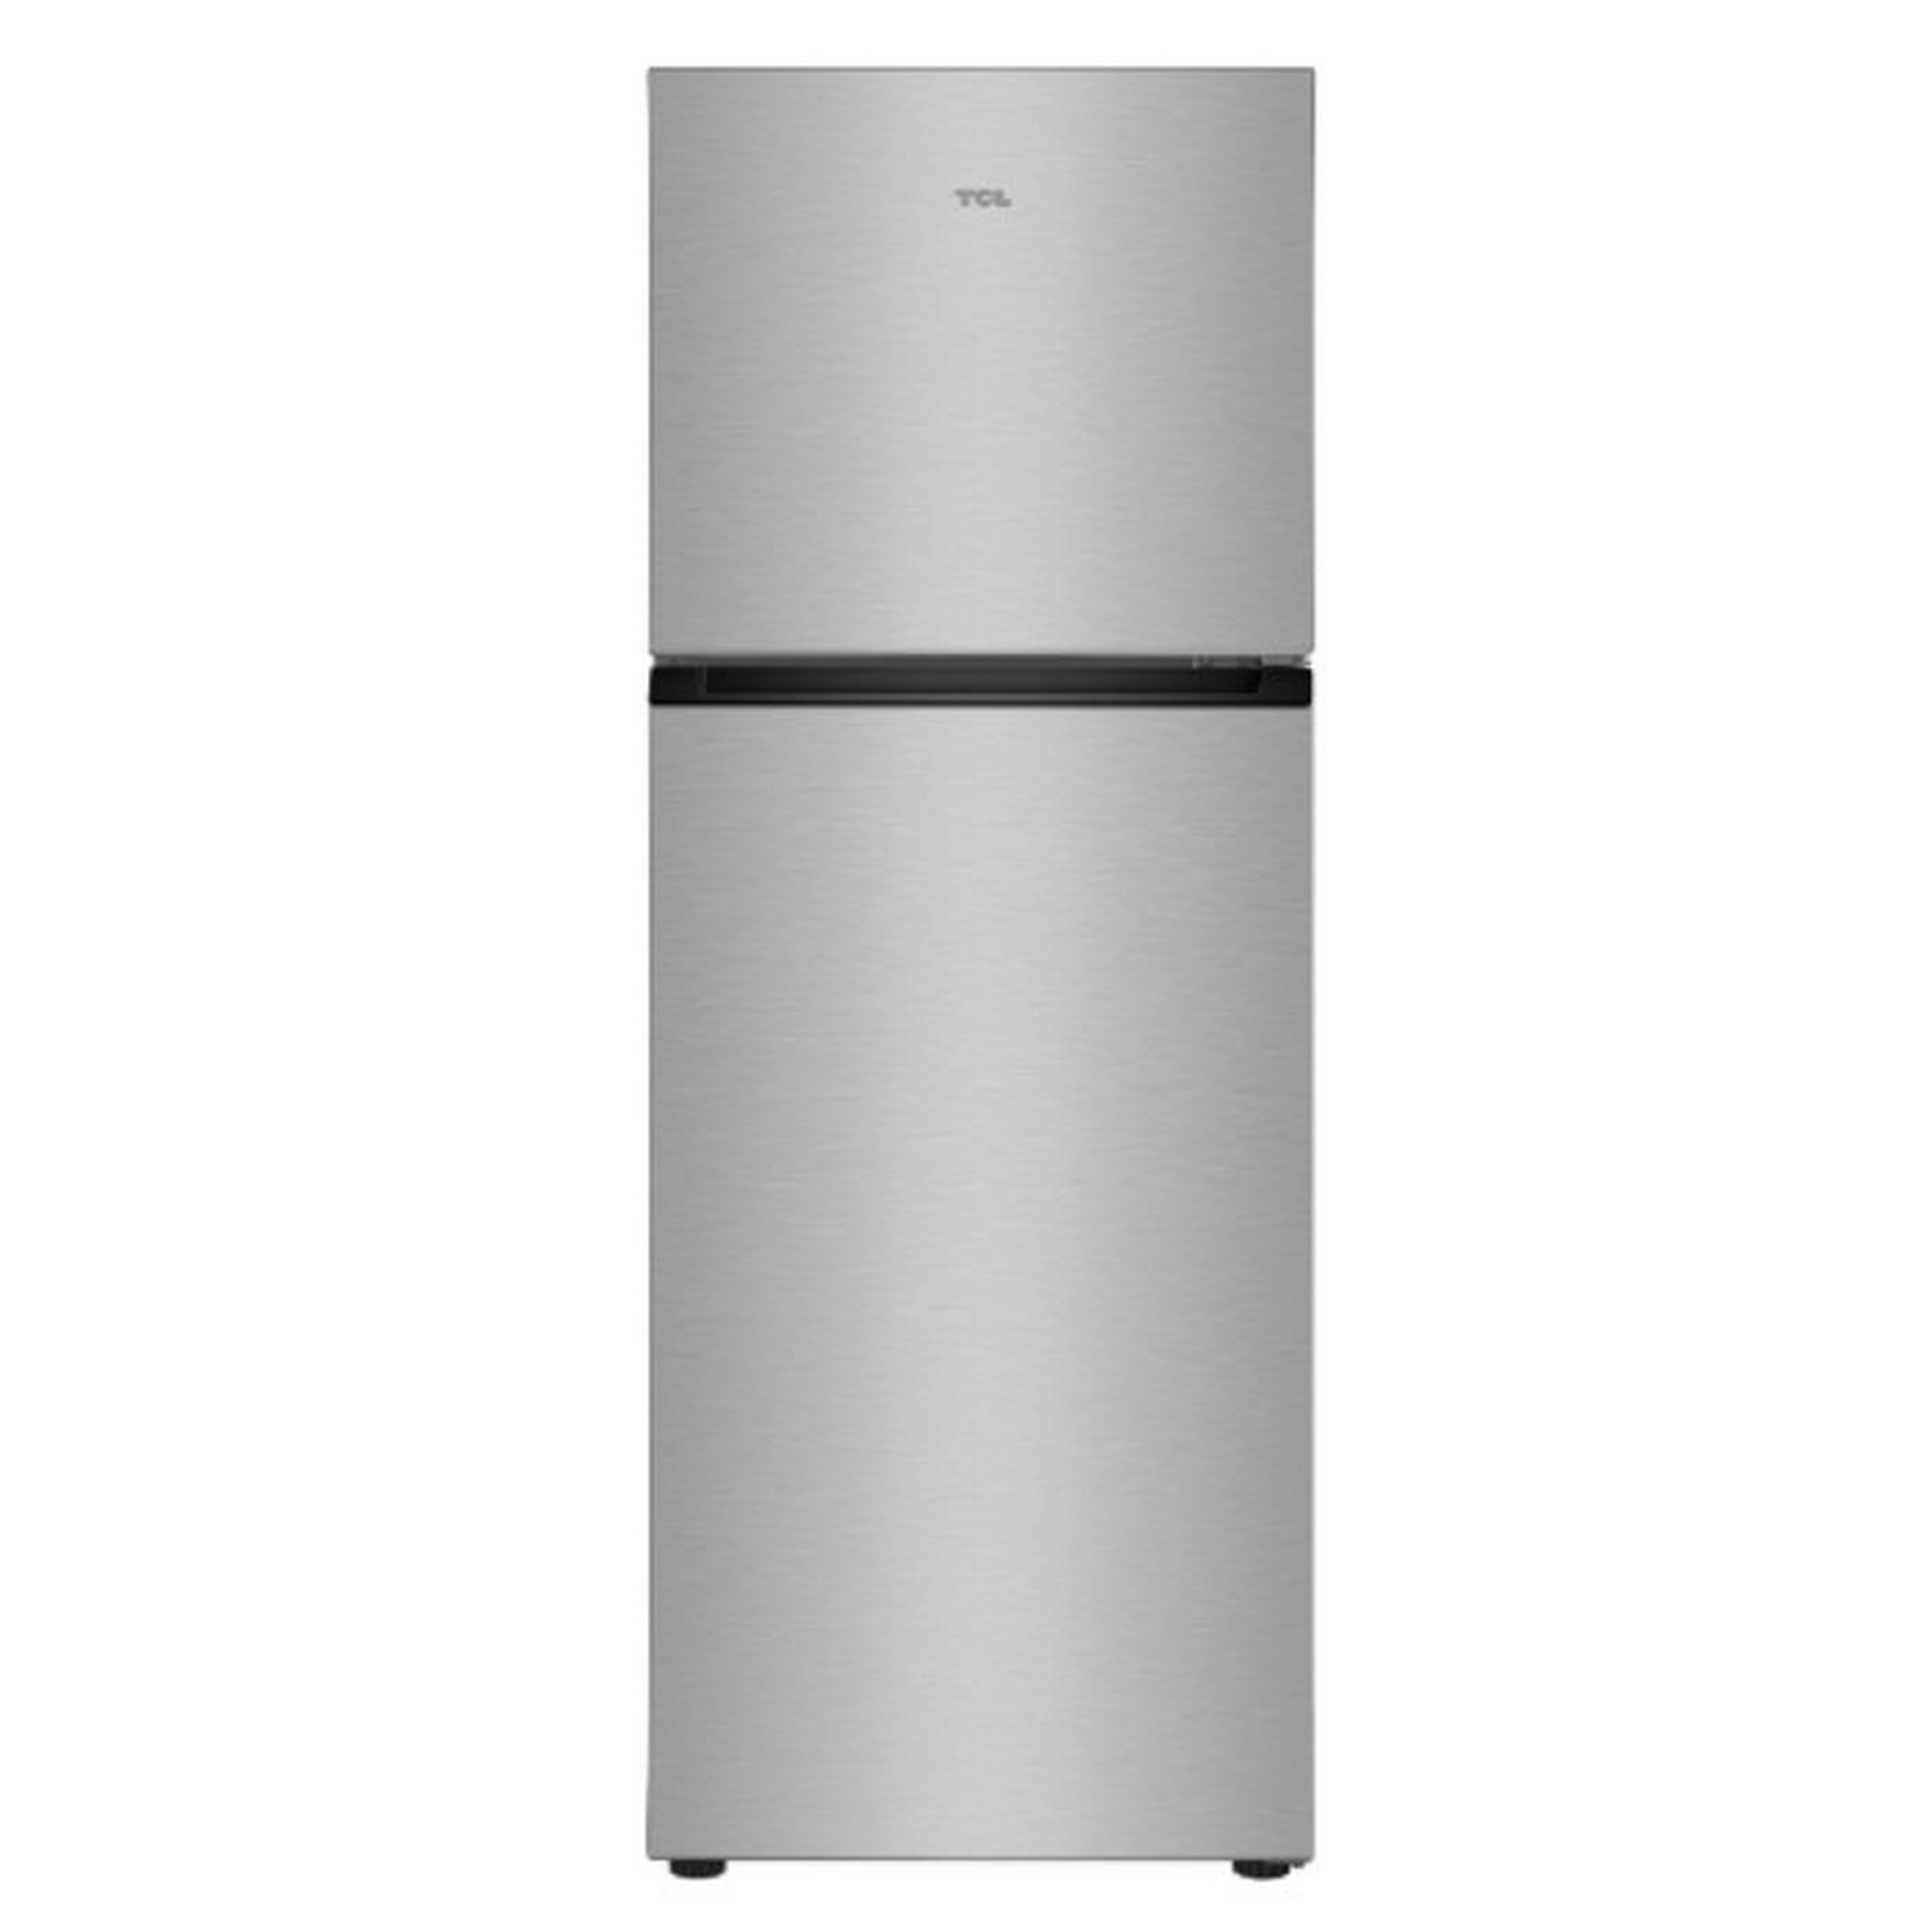 TCL Top Freezer Refrigerator, 13 CFT, 370 Liters, P370TMN – Inox